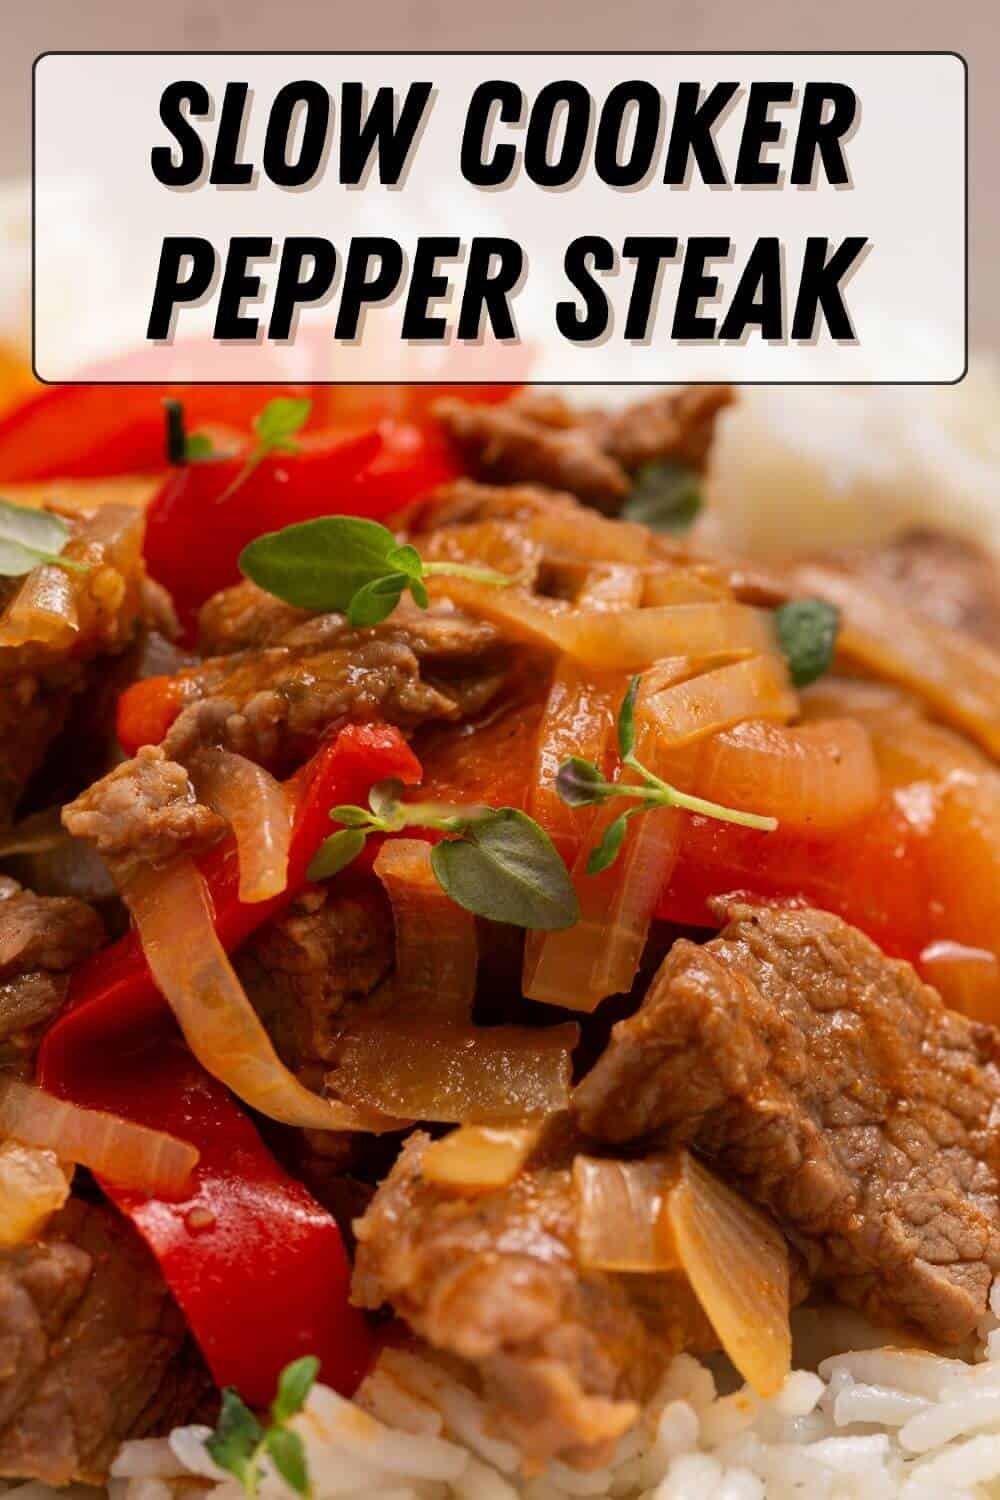 Slow cooker pepper steak.